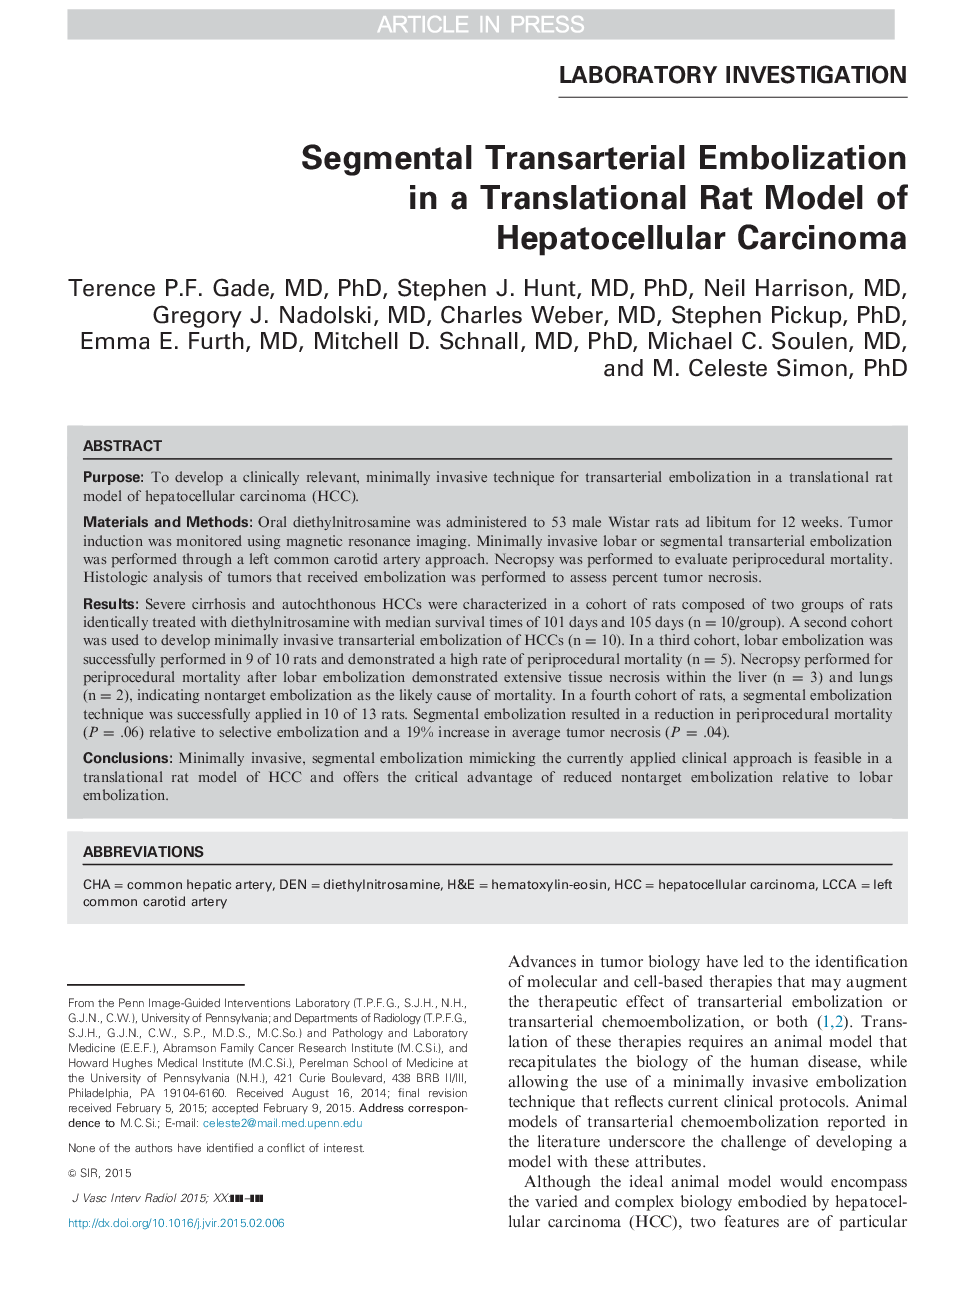 Segmental Transarterial Embolization in a Translational Rat Model of Hepatocellular Carcinoma